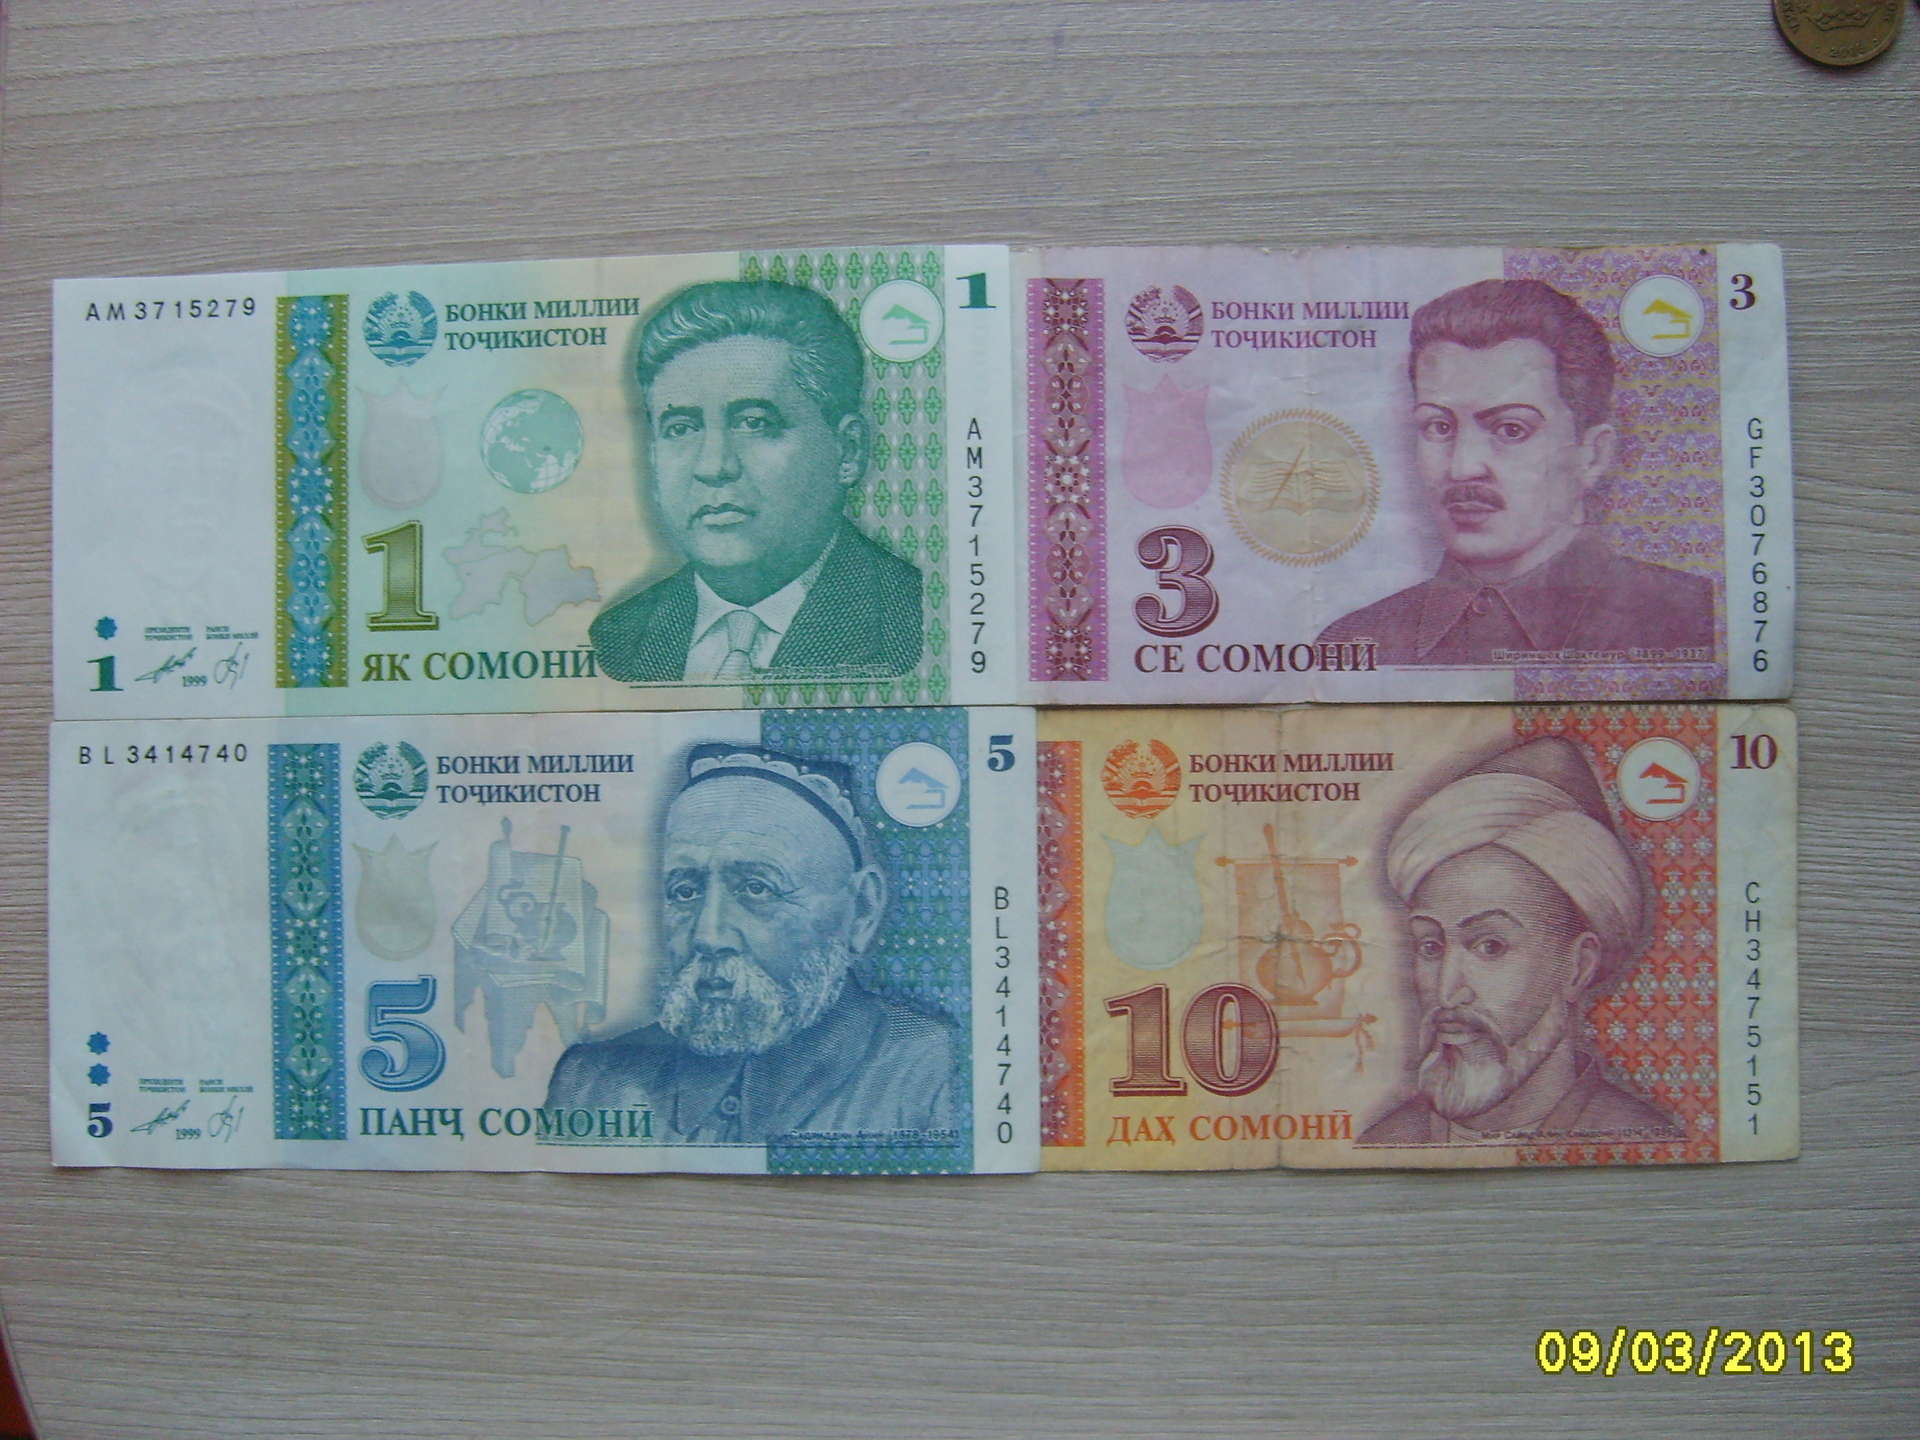 500 сомони таджикистан в рублях. Таджикская валюта. 100 Сомони. Один Сомони в рублях. 100 Сомони в рублях.